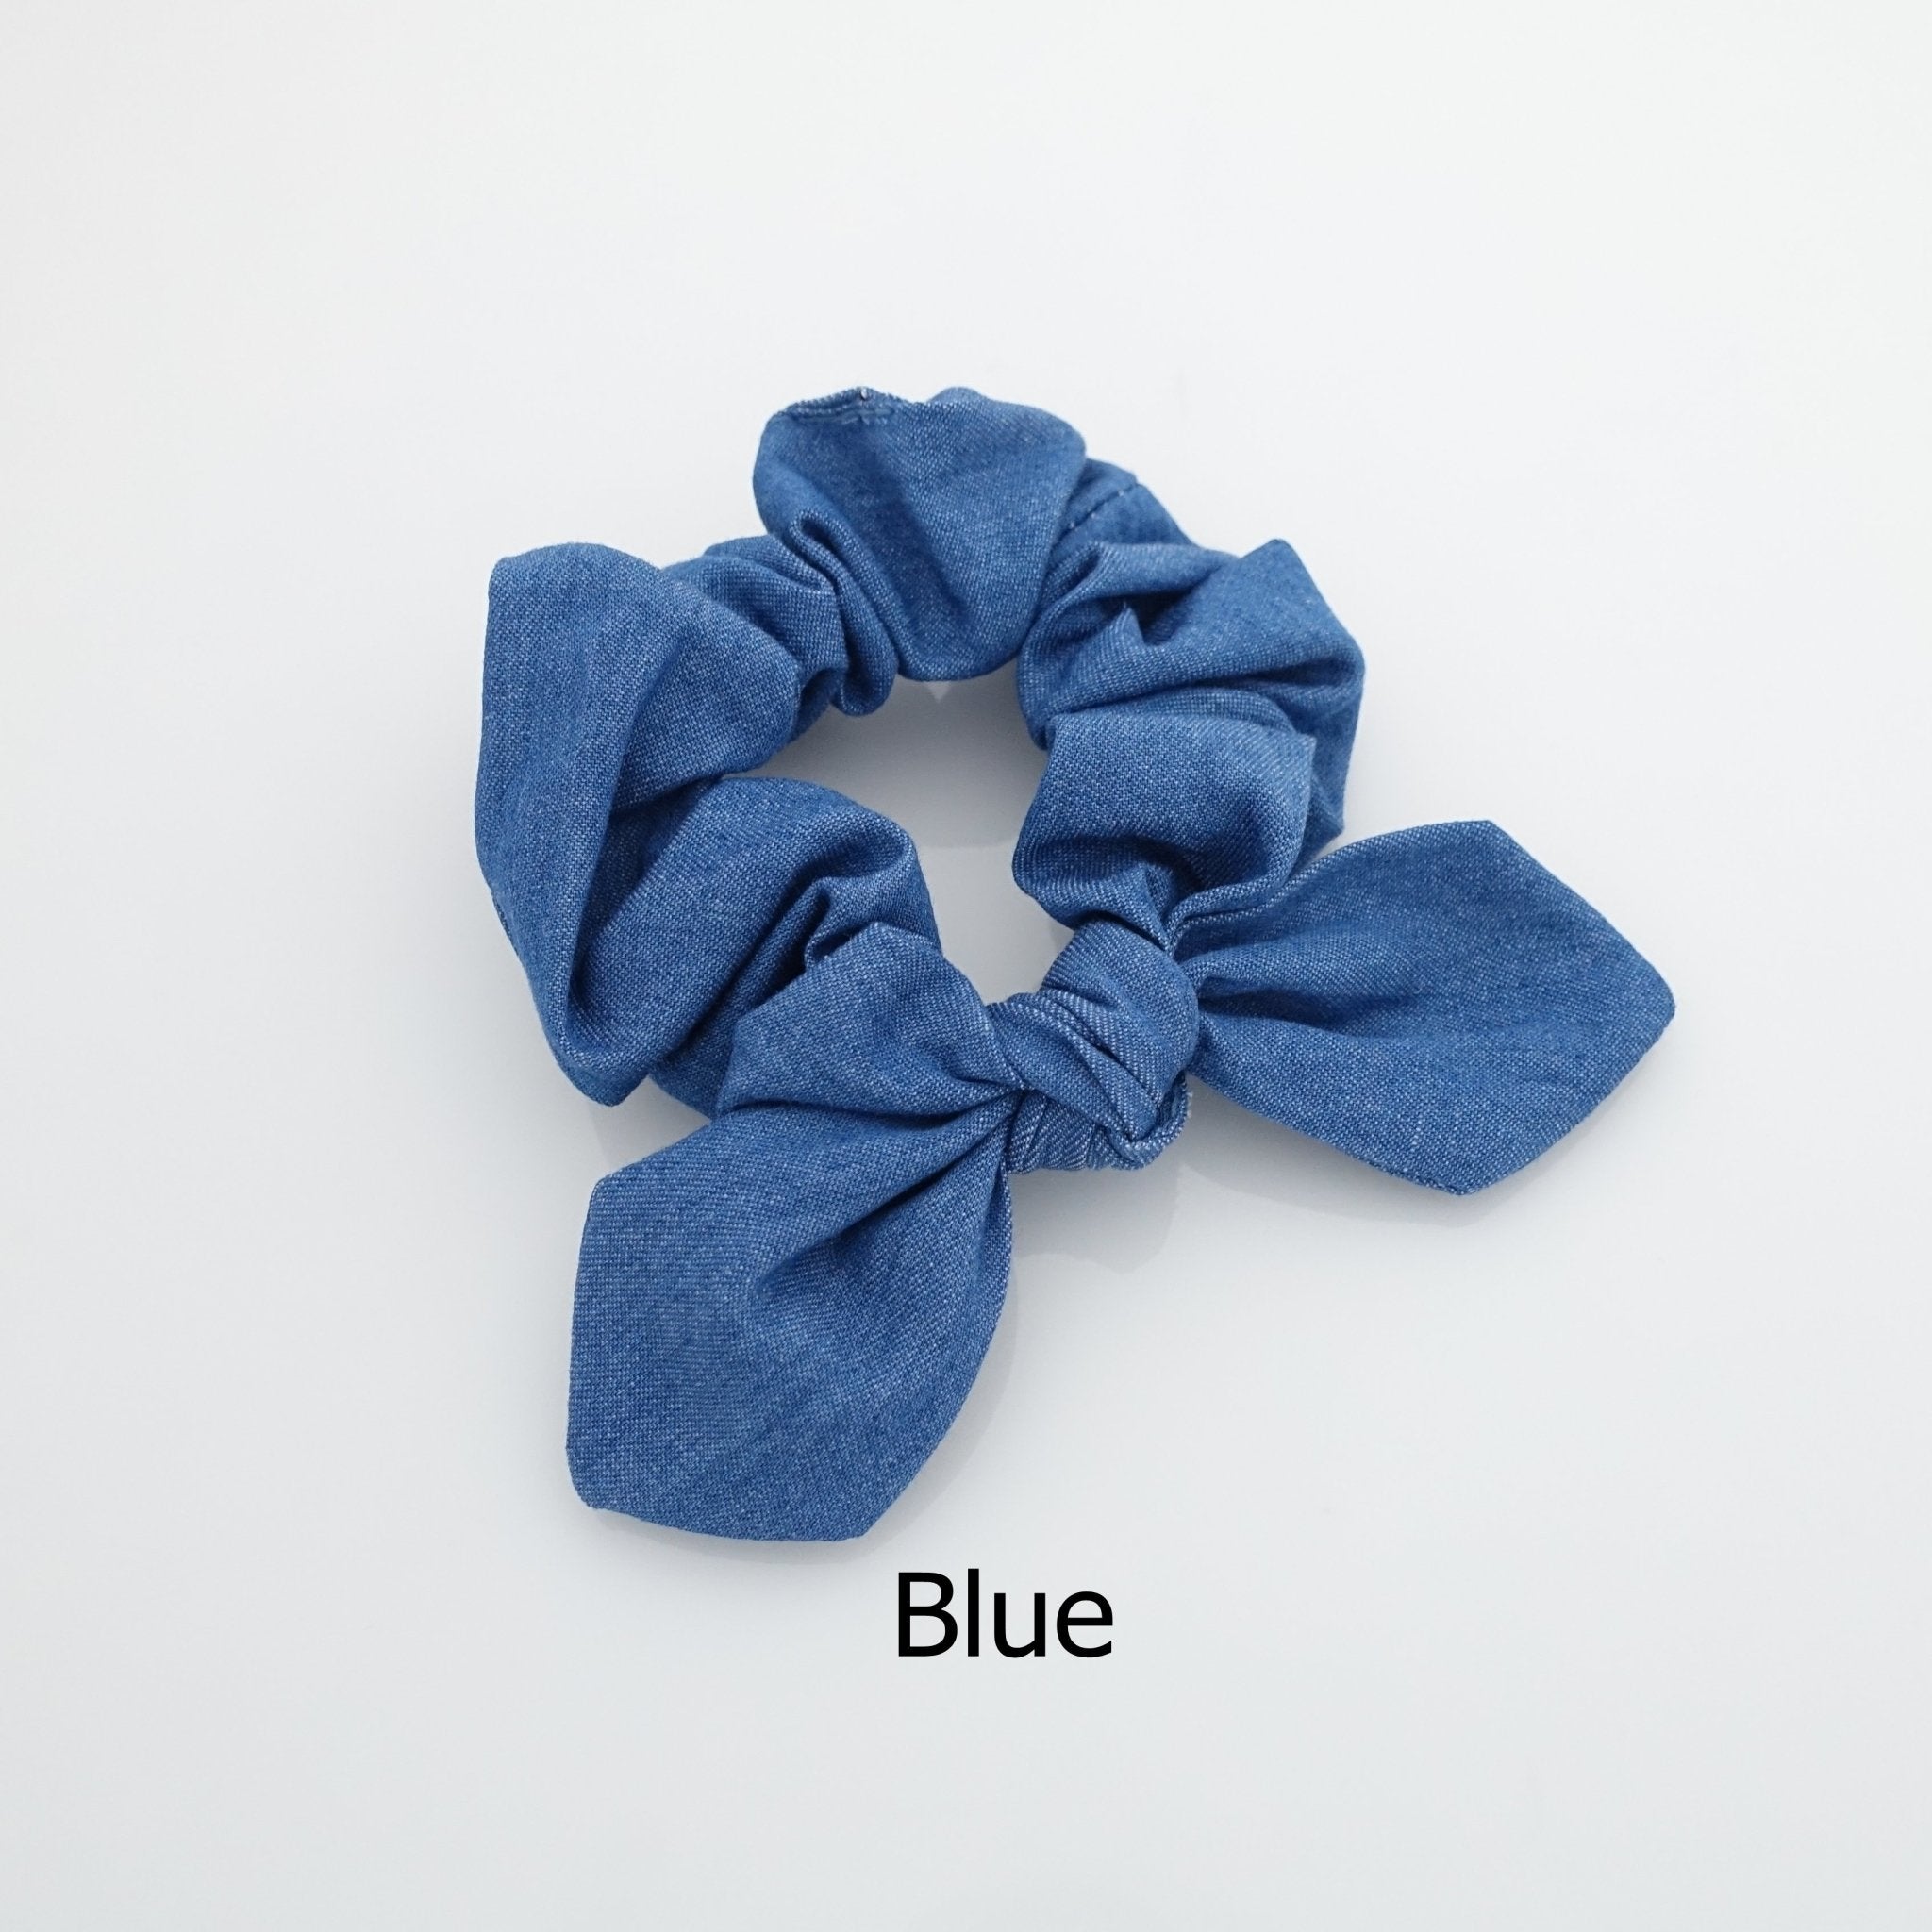 veryshine.com scrunchies/hair holder denim bow knot scrunchies simple casual cotton jean fabric scrunchy hair accessory